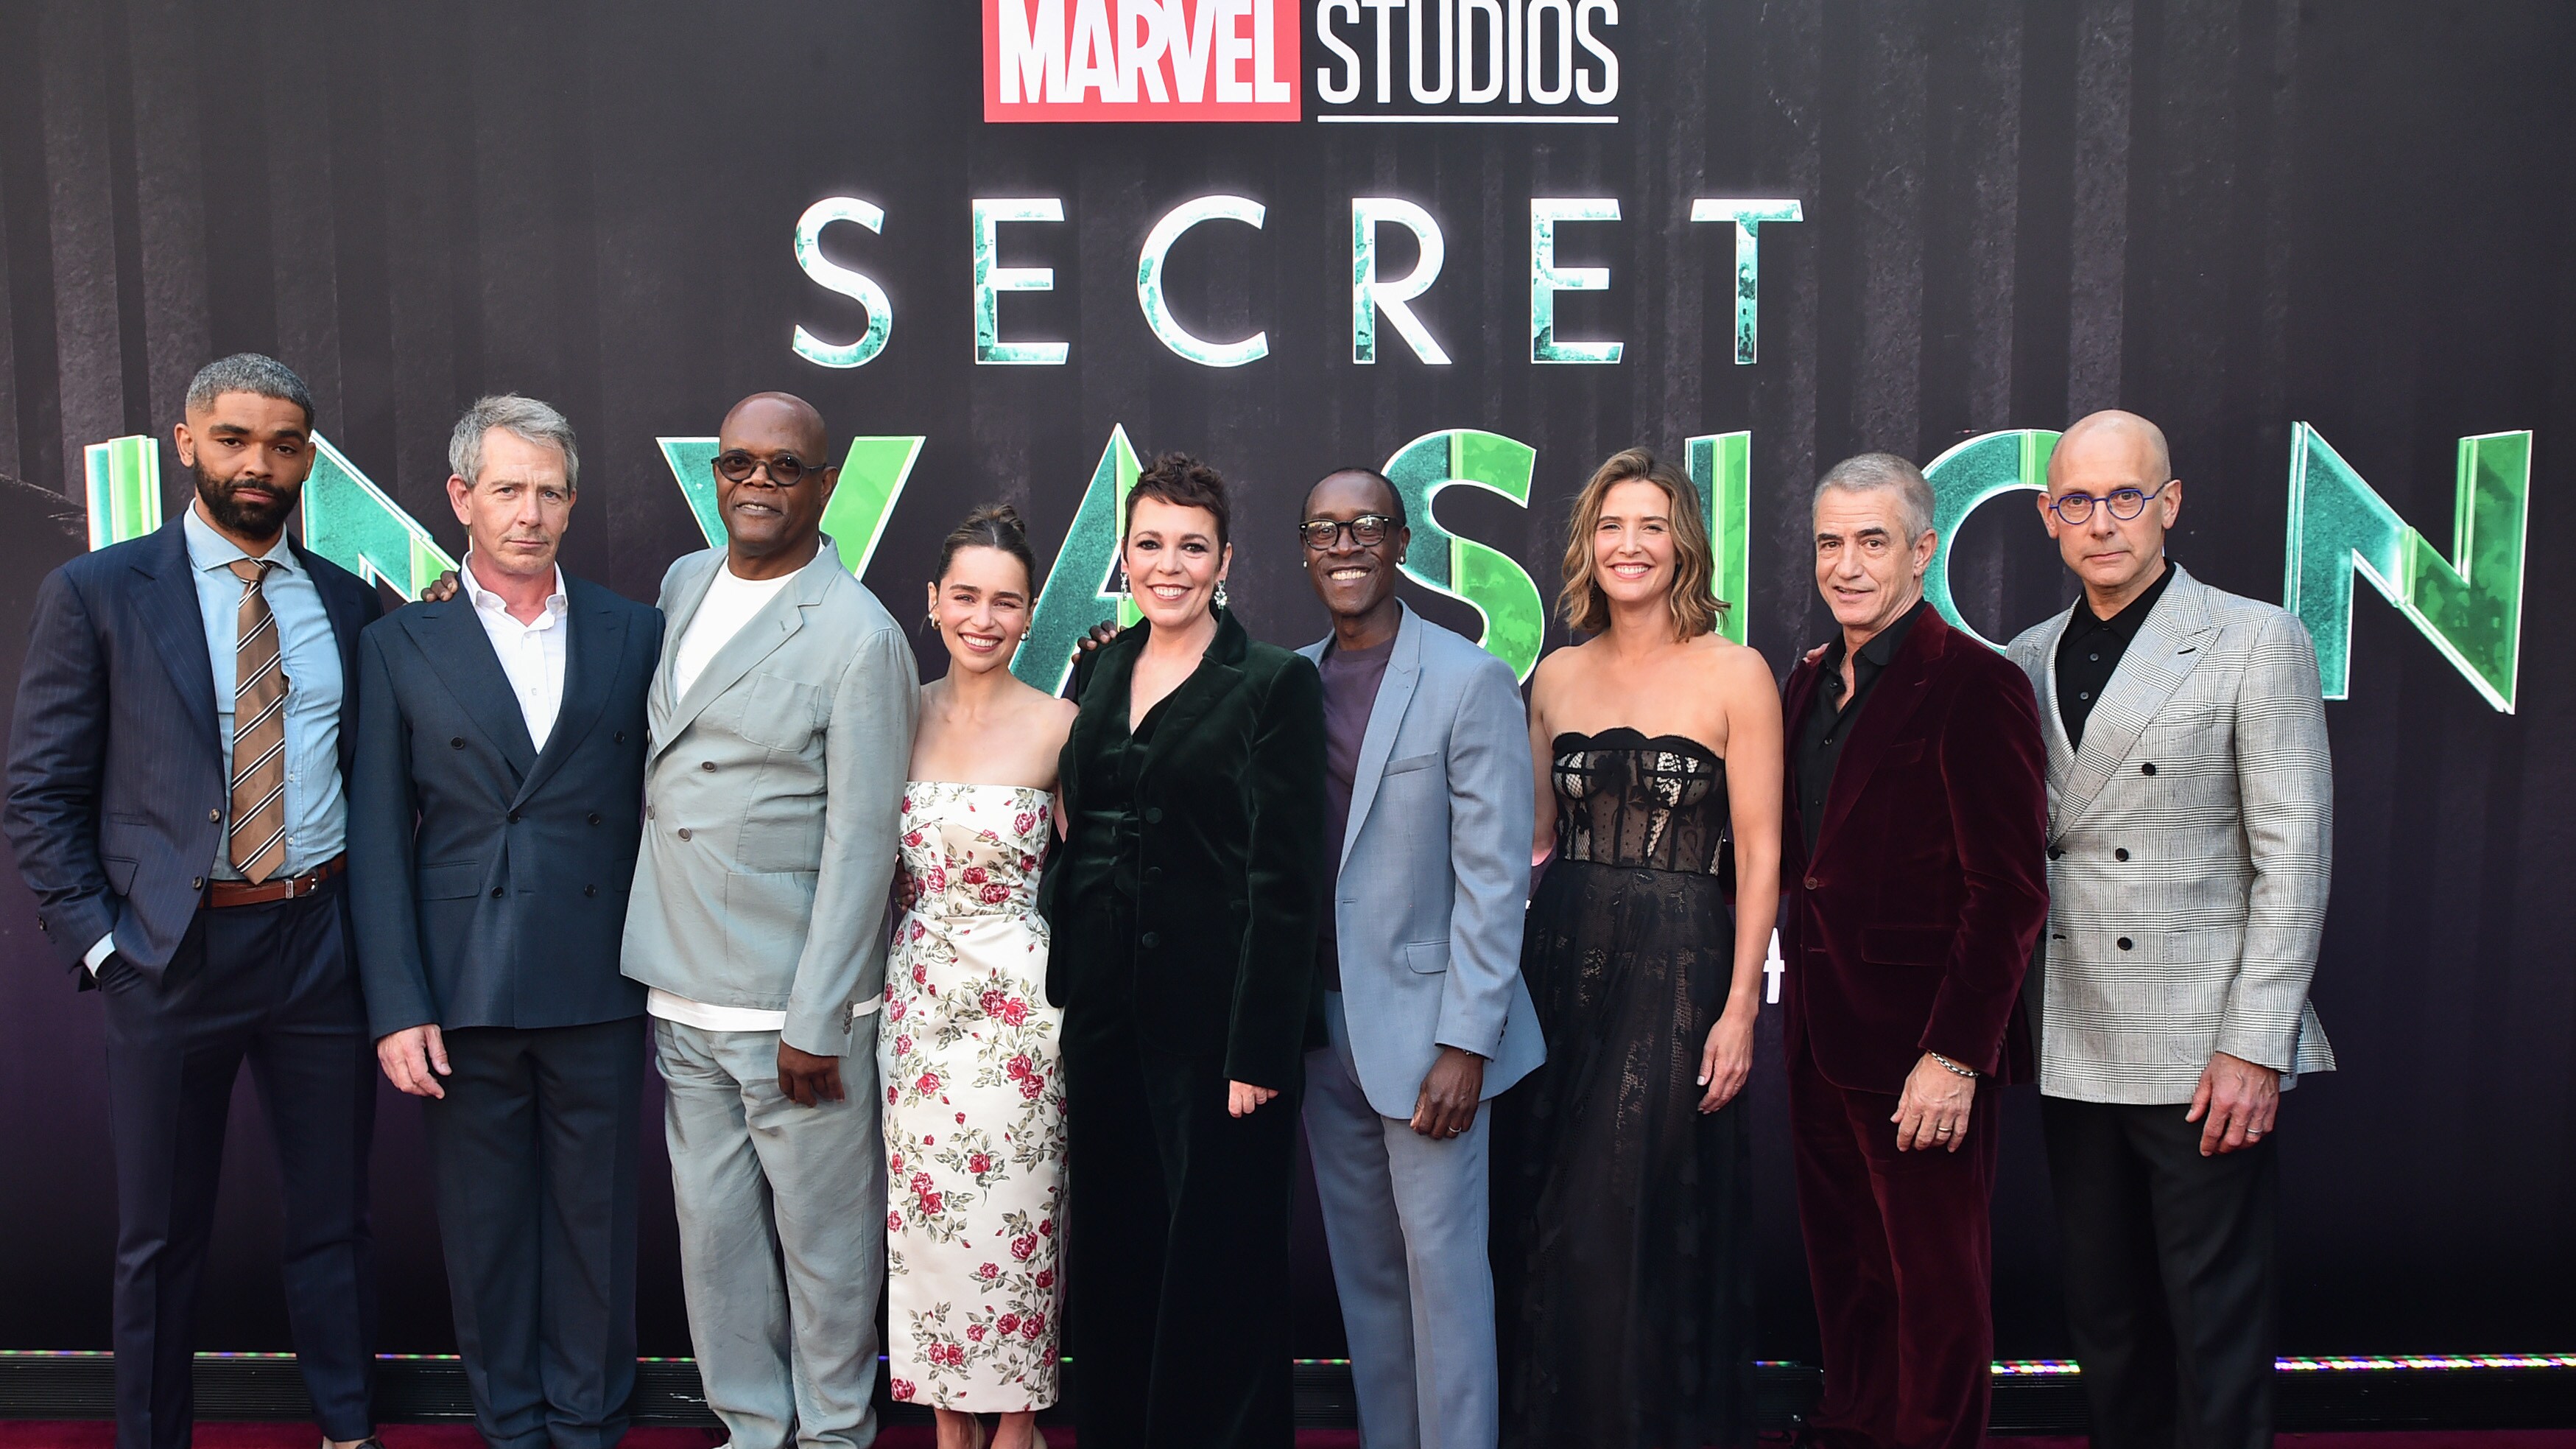 Disney+ Shares Photos From Marvel Studios’ “Secret Invasion” Special Launch Event